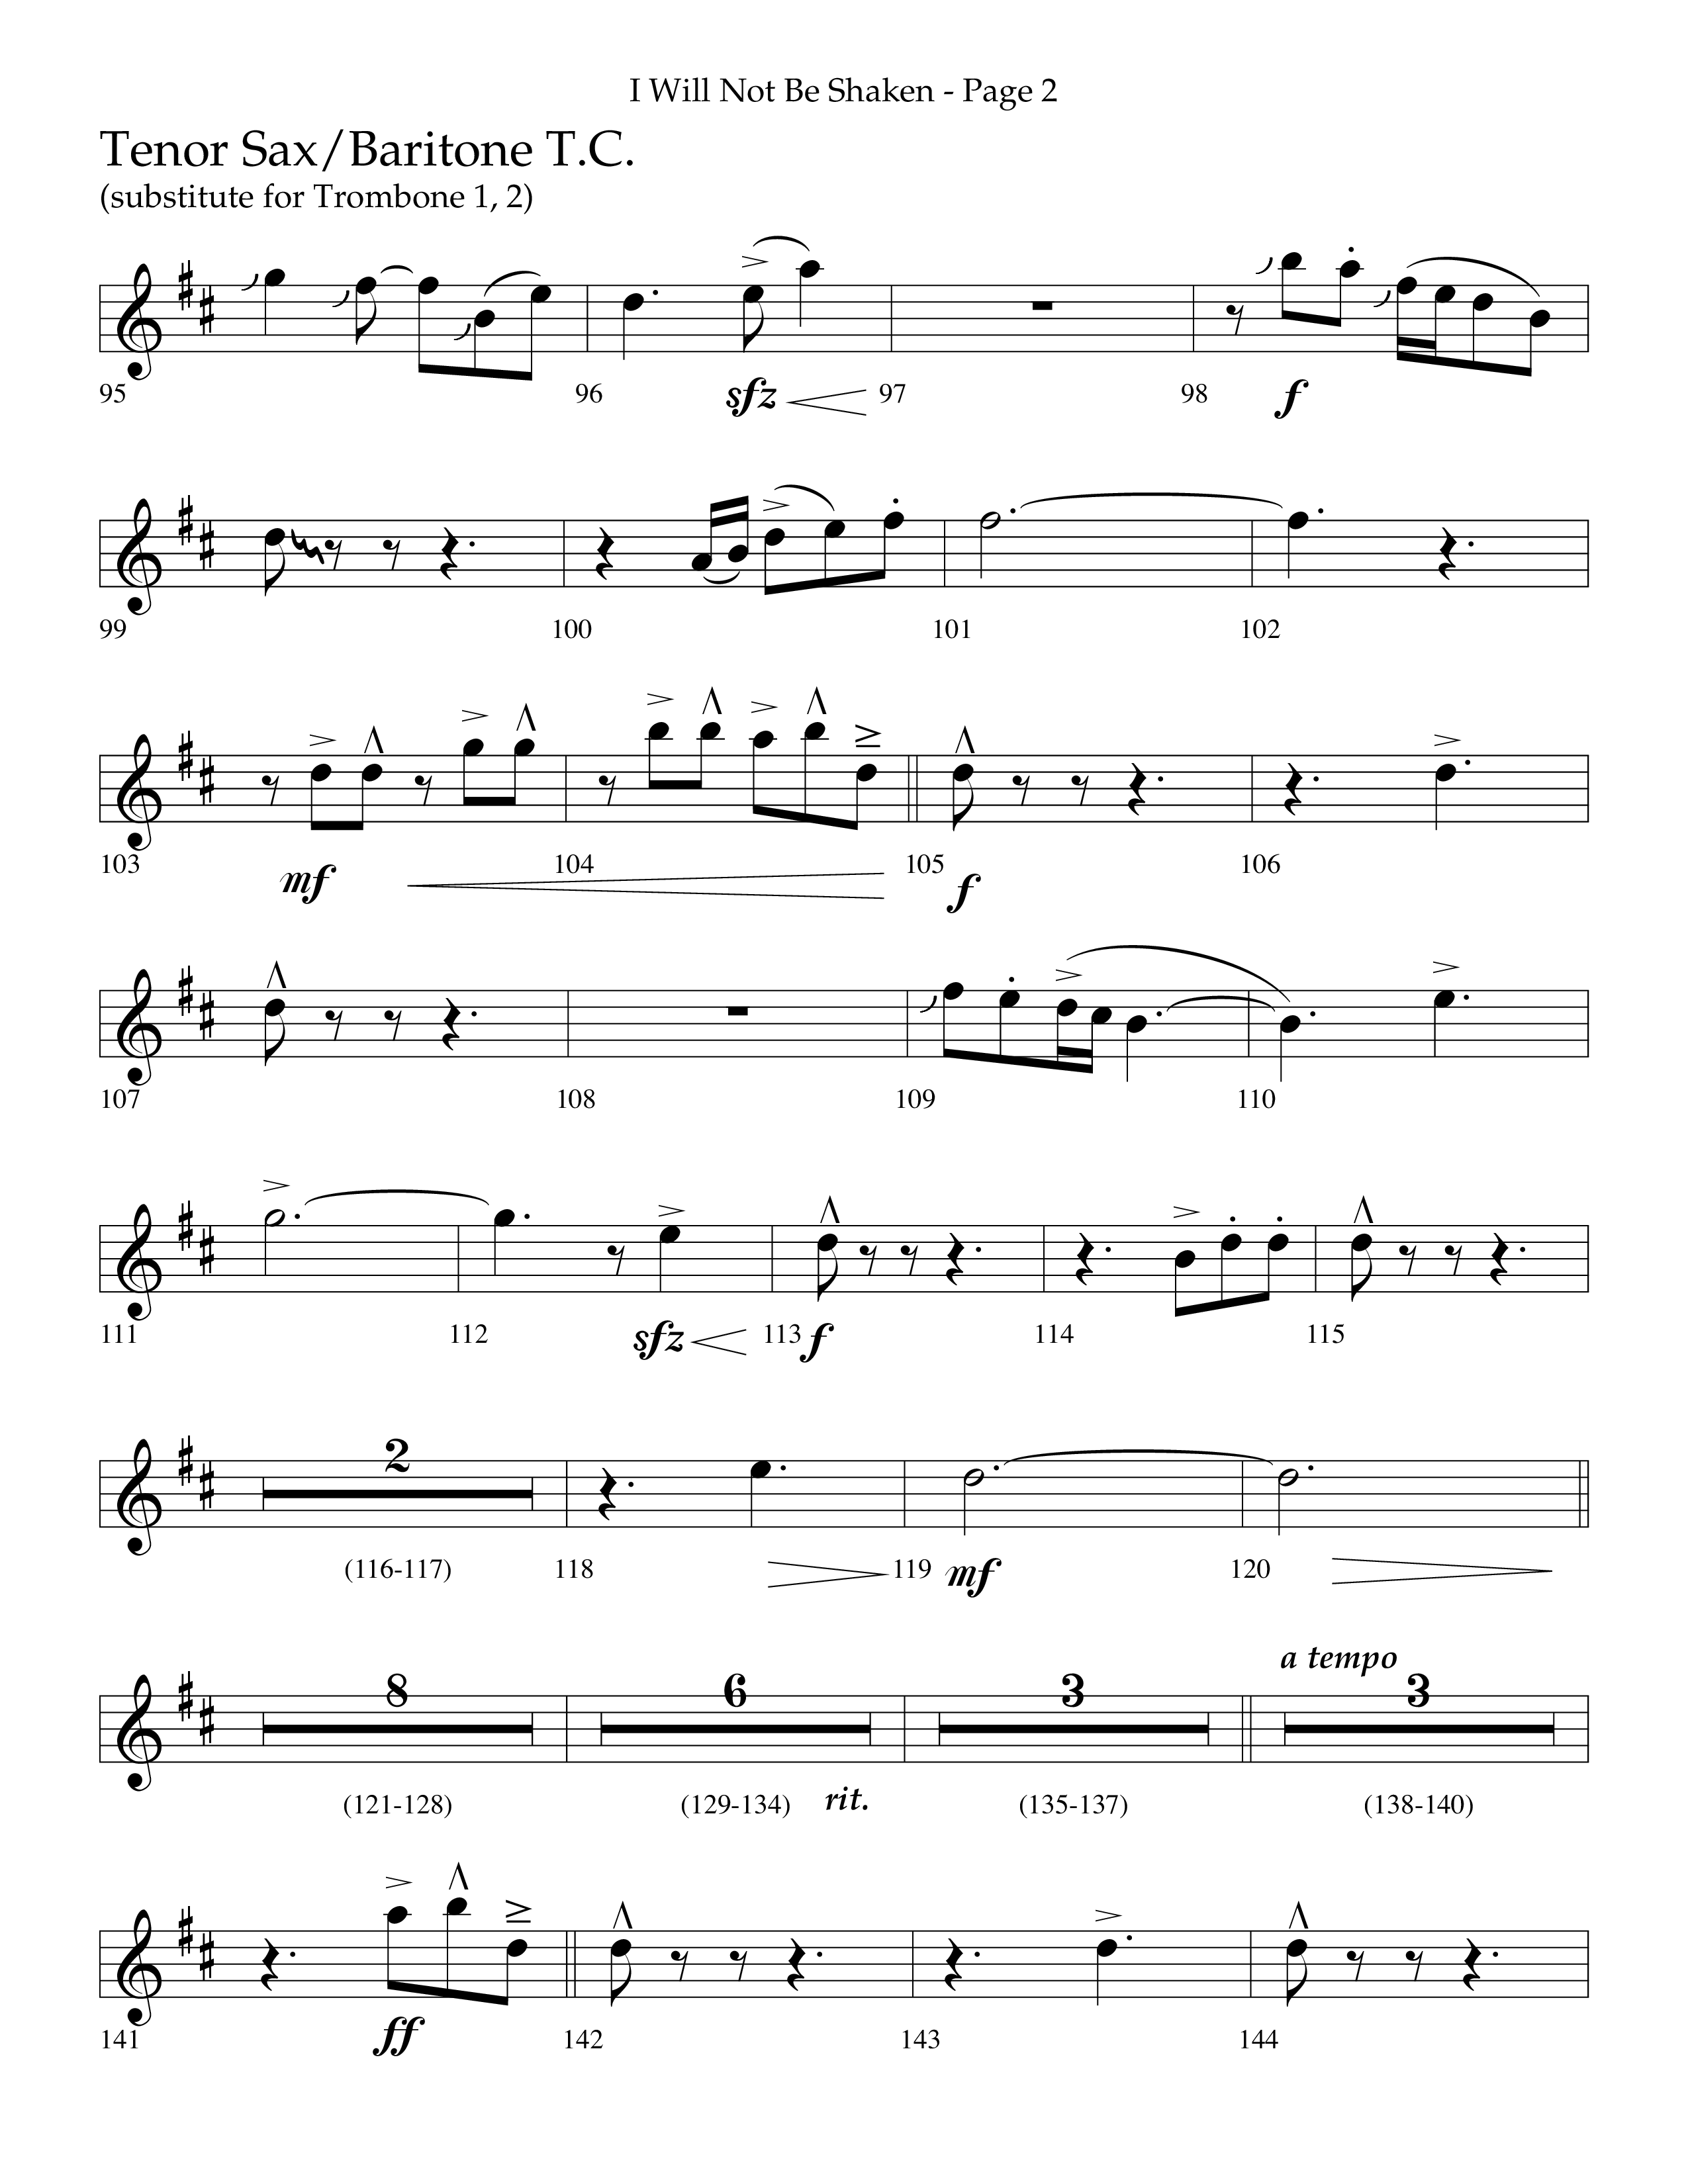 I Will Not Be Shaken (Choral Anthem SATB) Tenor Sax/Baritone T.C. (Lifeway Choral / Arr. Cliff Duren)